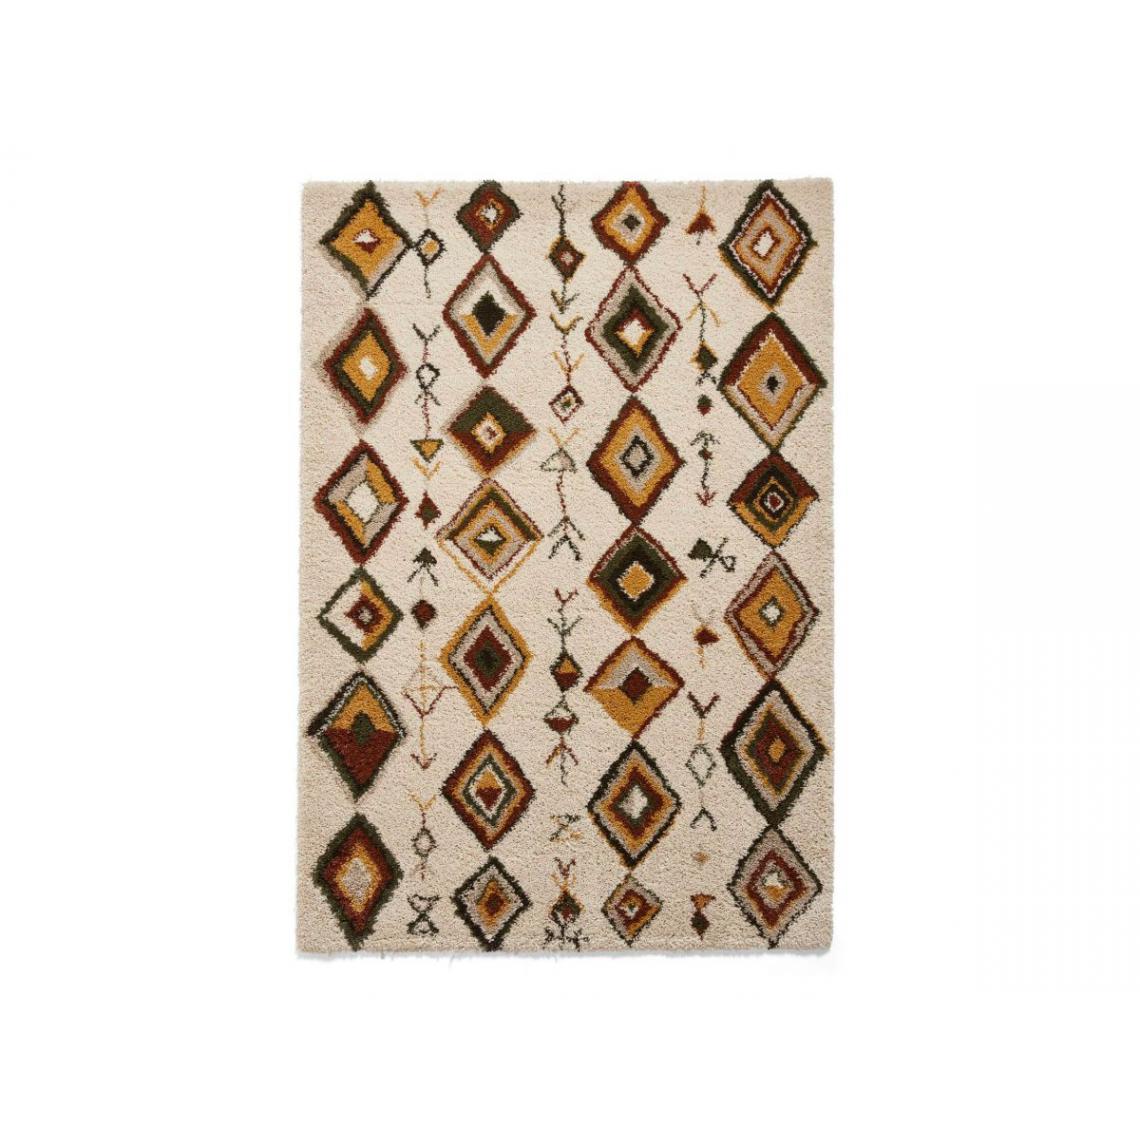 Bobochic - BOBOCHIC Tapis poil mi-long rectangulaire ANGUS motif graphique Terracotta 160x220 - Tapis